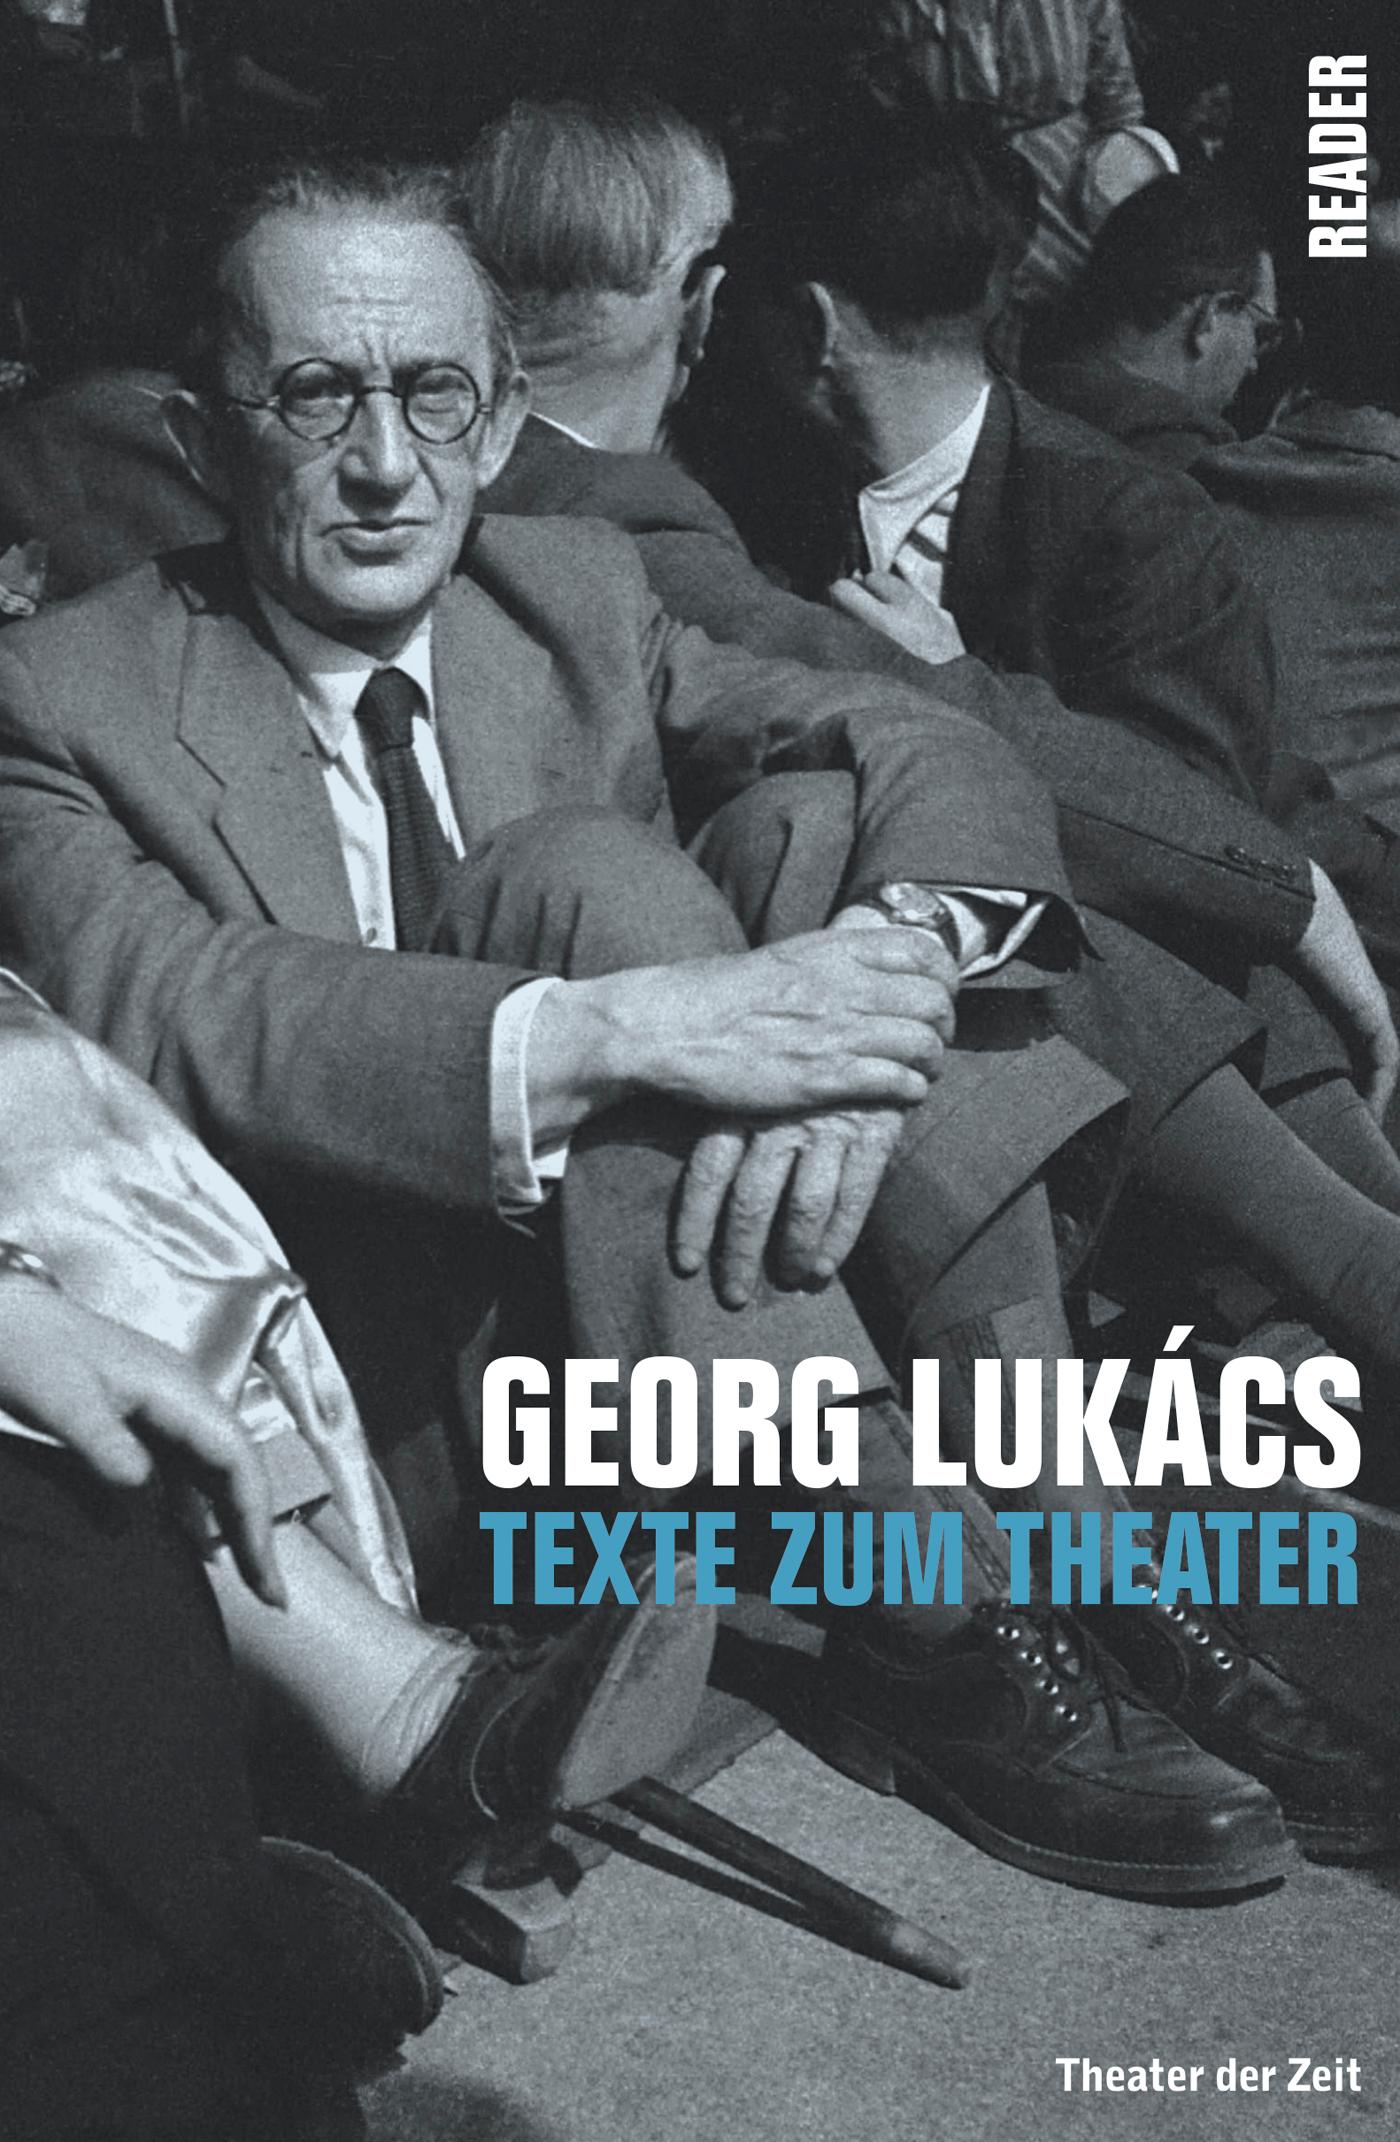 "Georg Lukács"